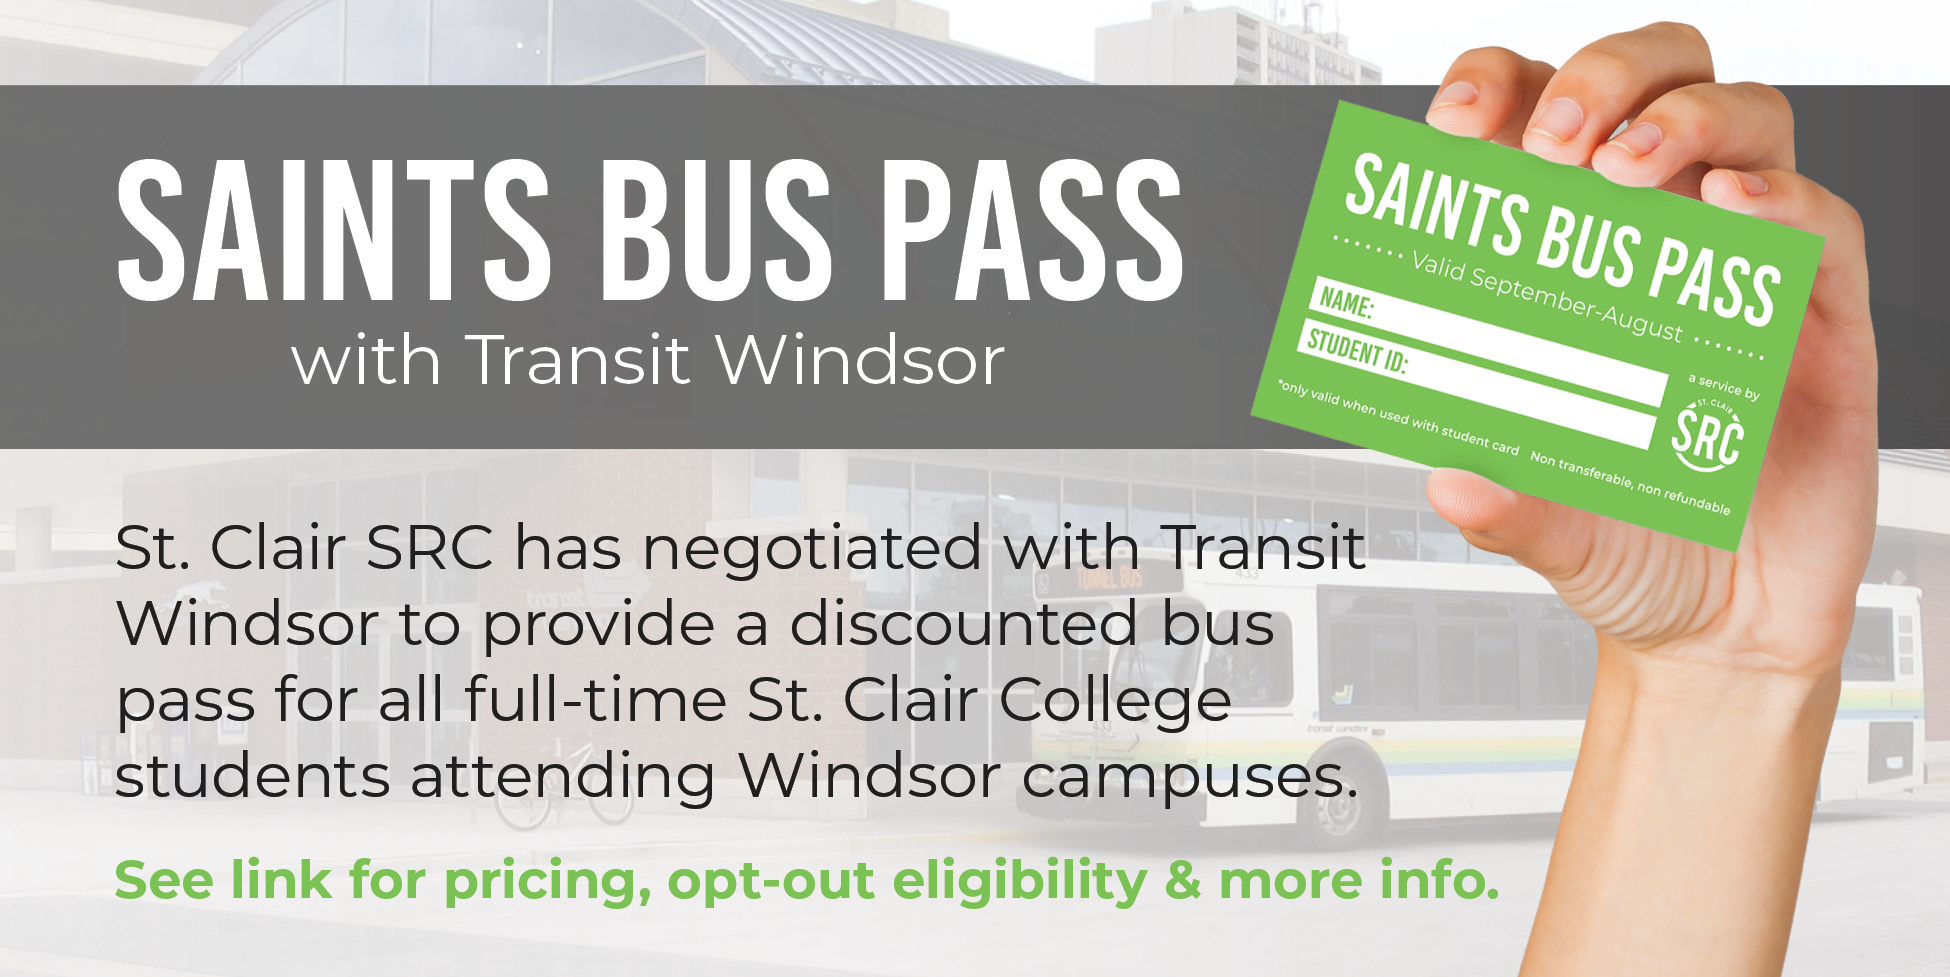 Saints Bus Pass with Transit Windsor